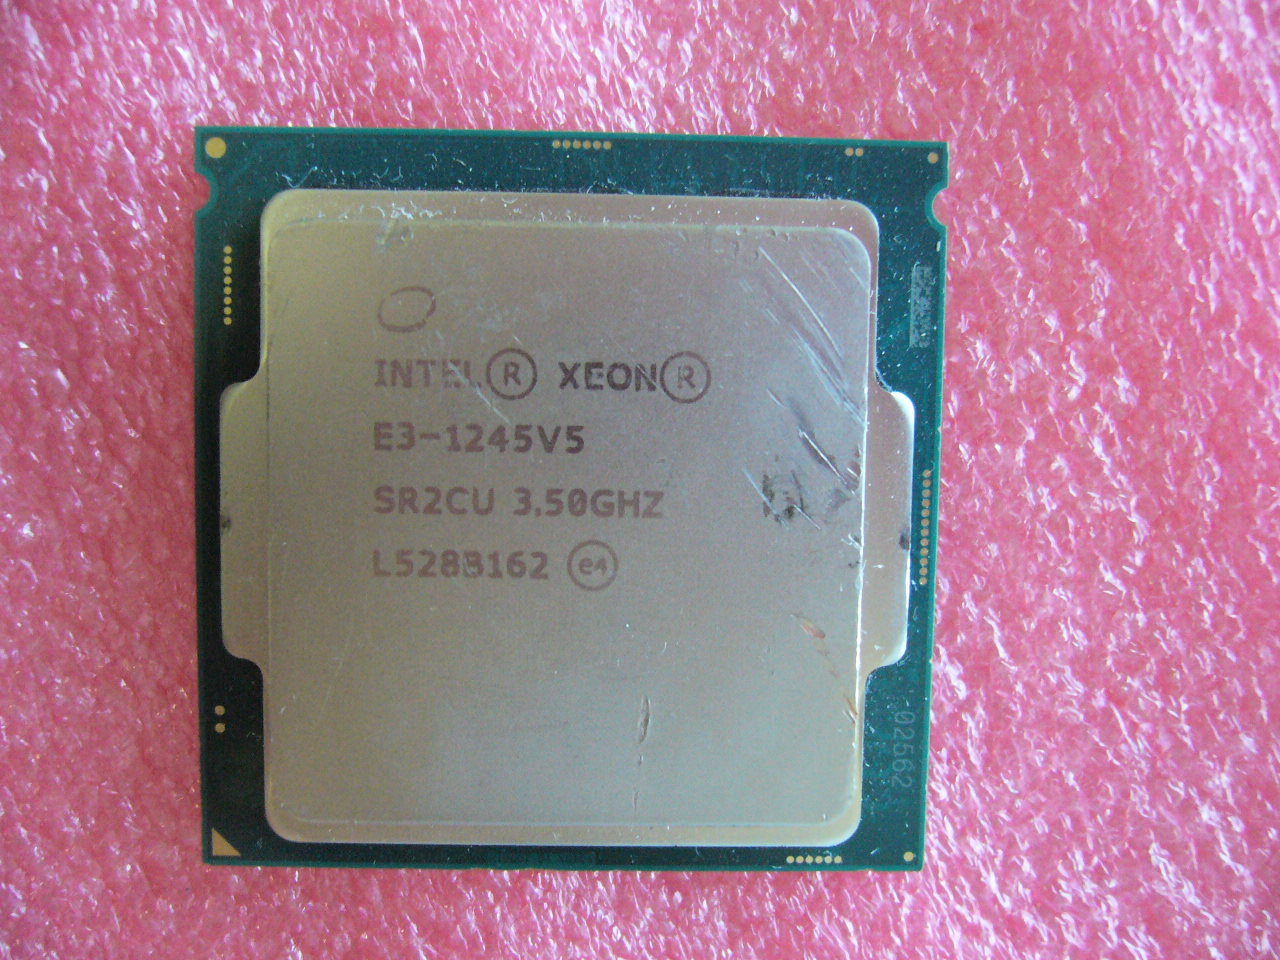 QTY 1x Intel Xeon CPU E3-1245 V5 Quad-Core 3.5Ghz LGA1151 SR2CU